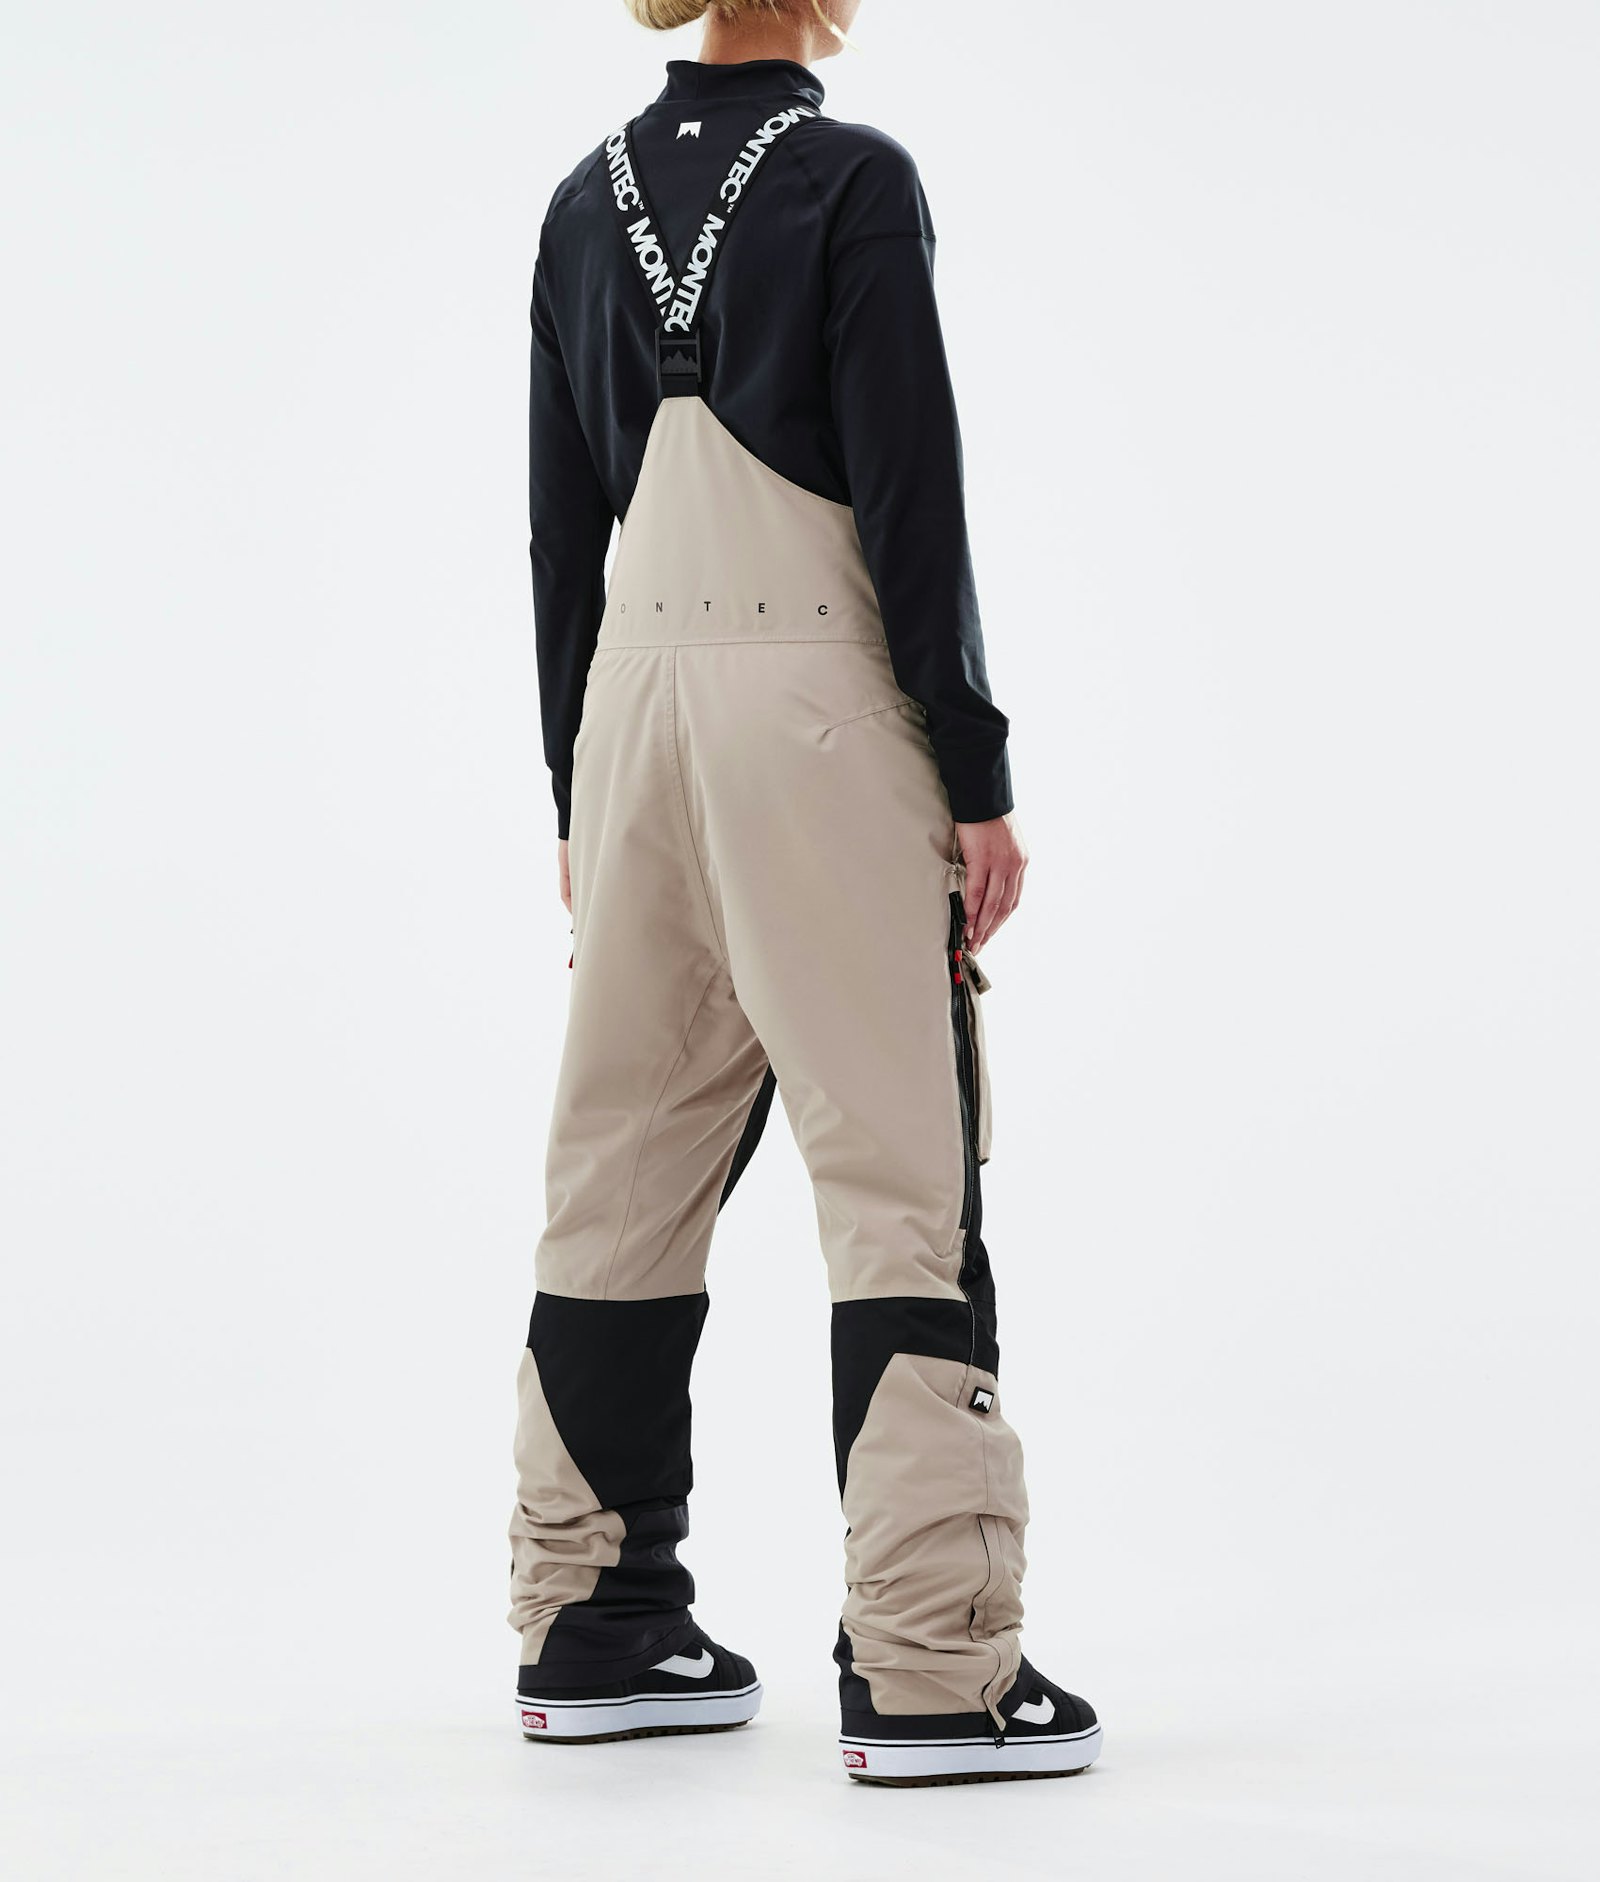 Fawk W 2021 Pantalon de Snowboard Femme Sand/Black